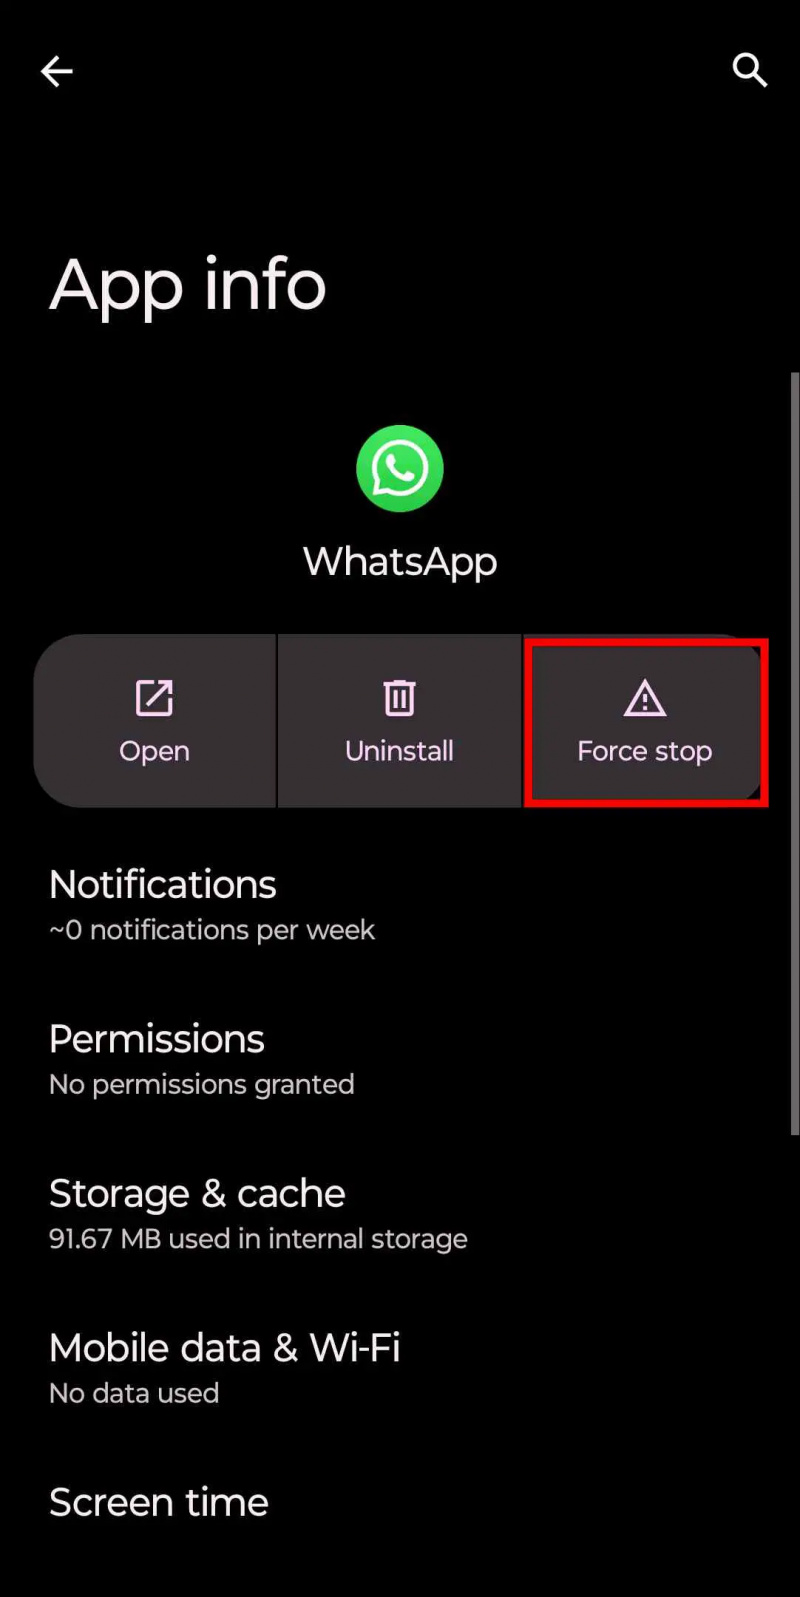   WhatsApp బీటా గడువు ముగిసిన లోపాన్ని పరిష్కరించడానికి Whatsappని బలవంతంగా ఆపండి